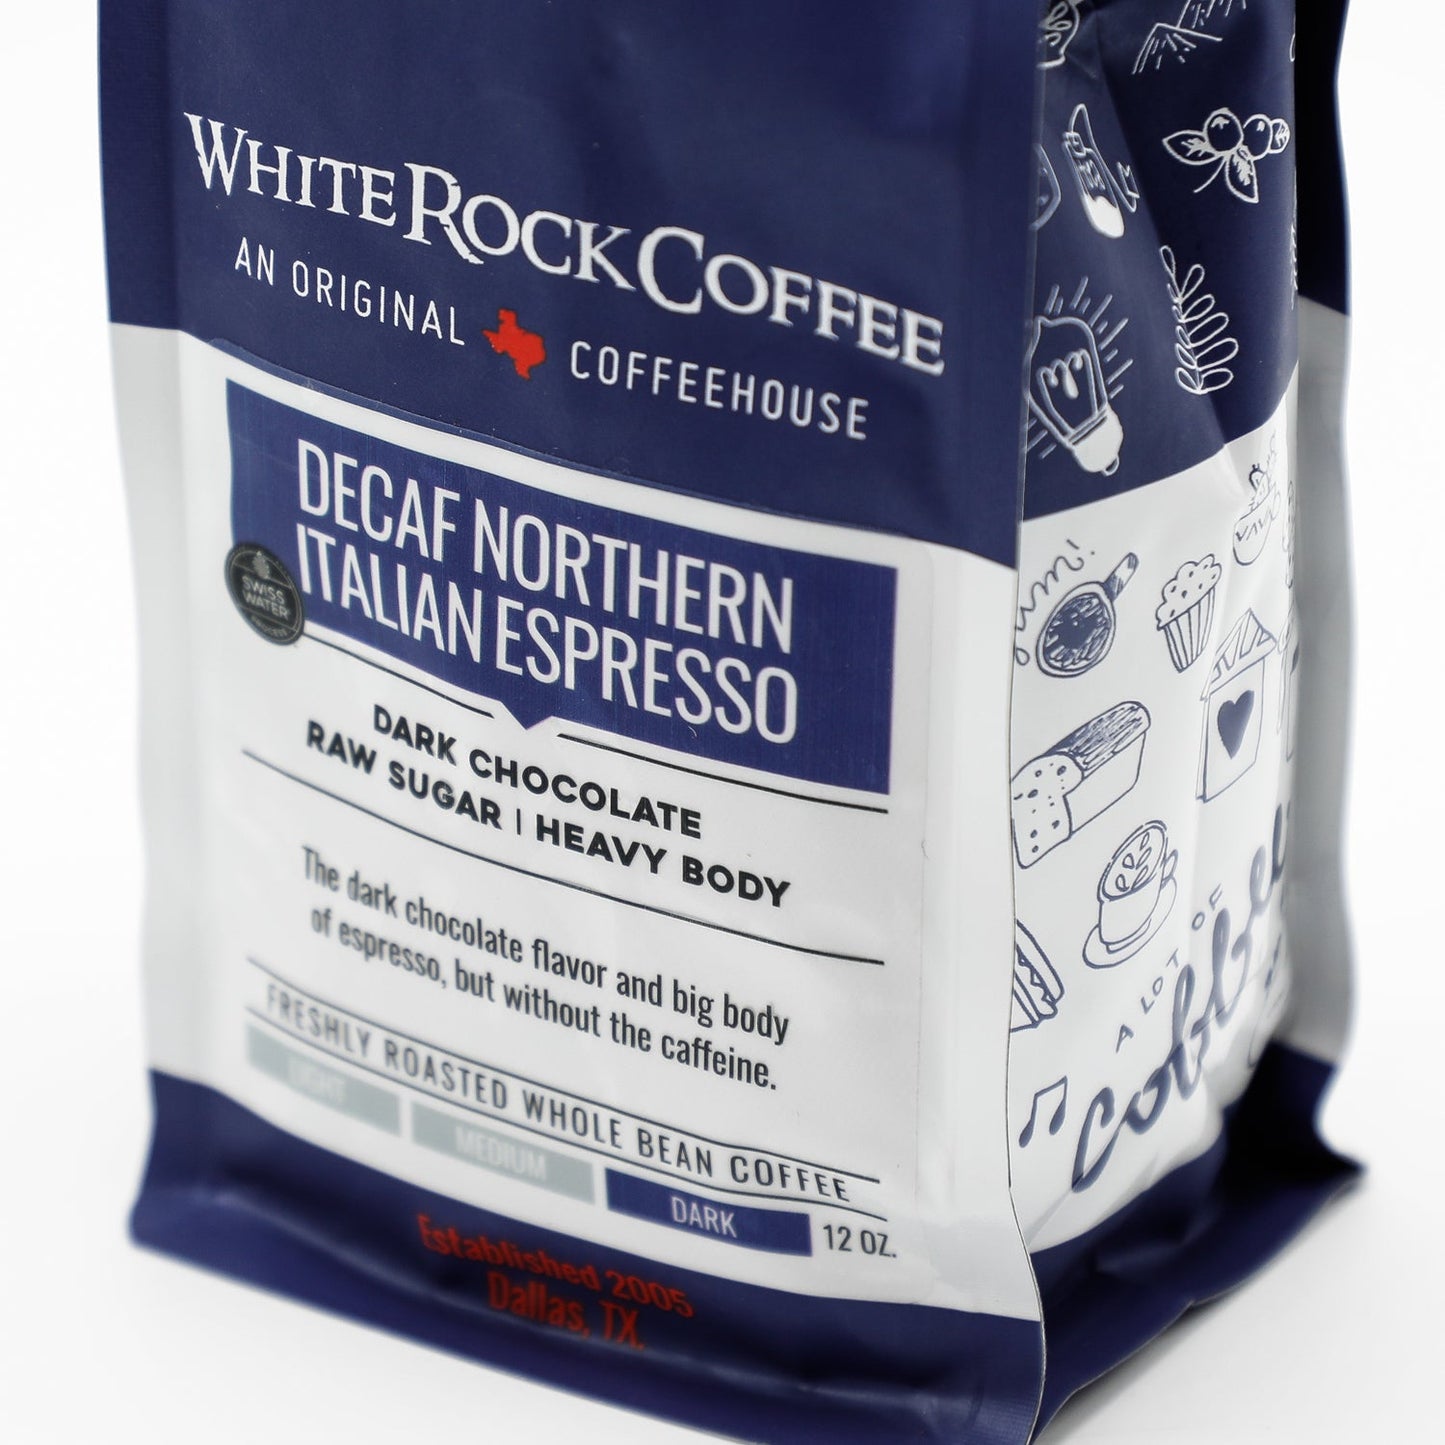 Decaf Northern Italian Espresso - White Rock Coffee